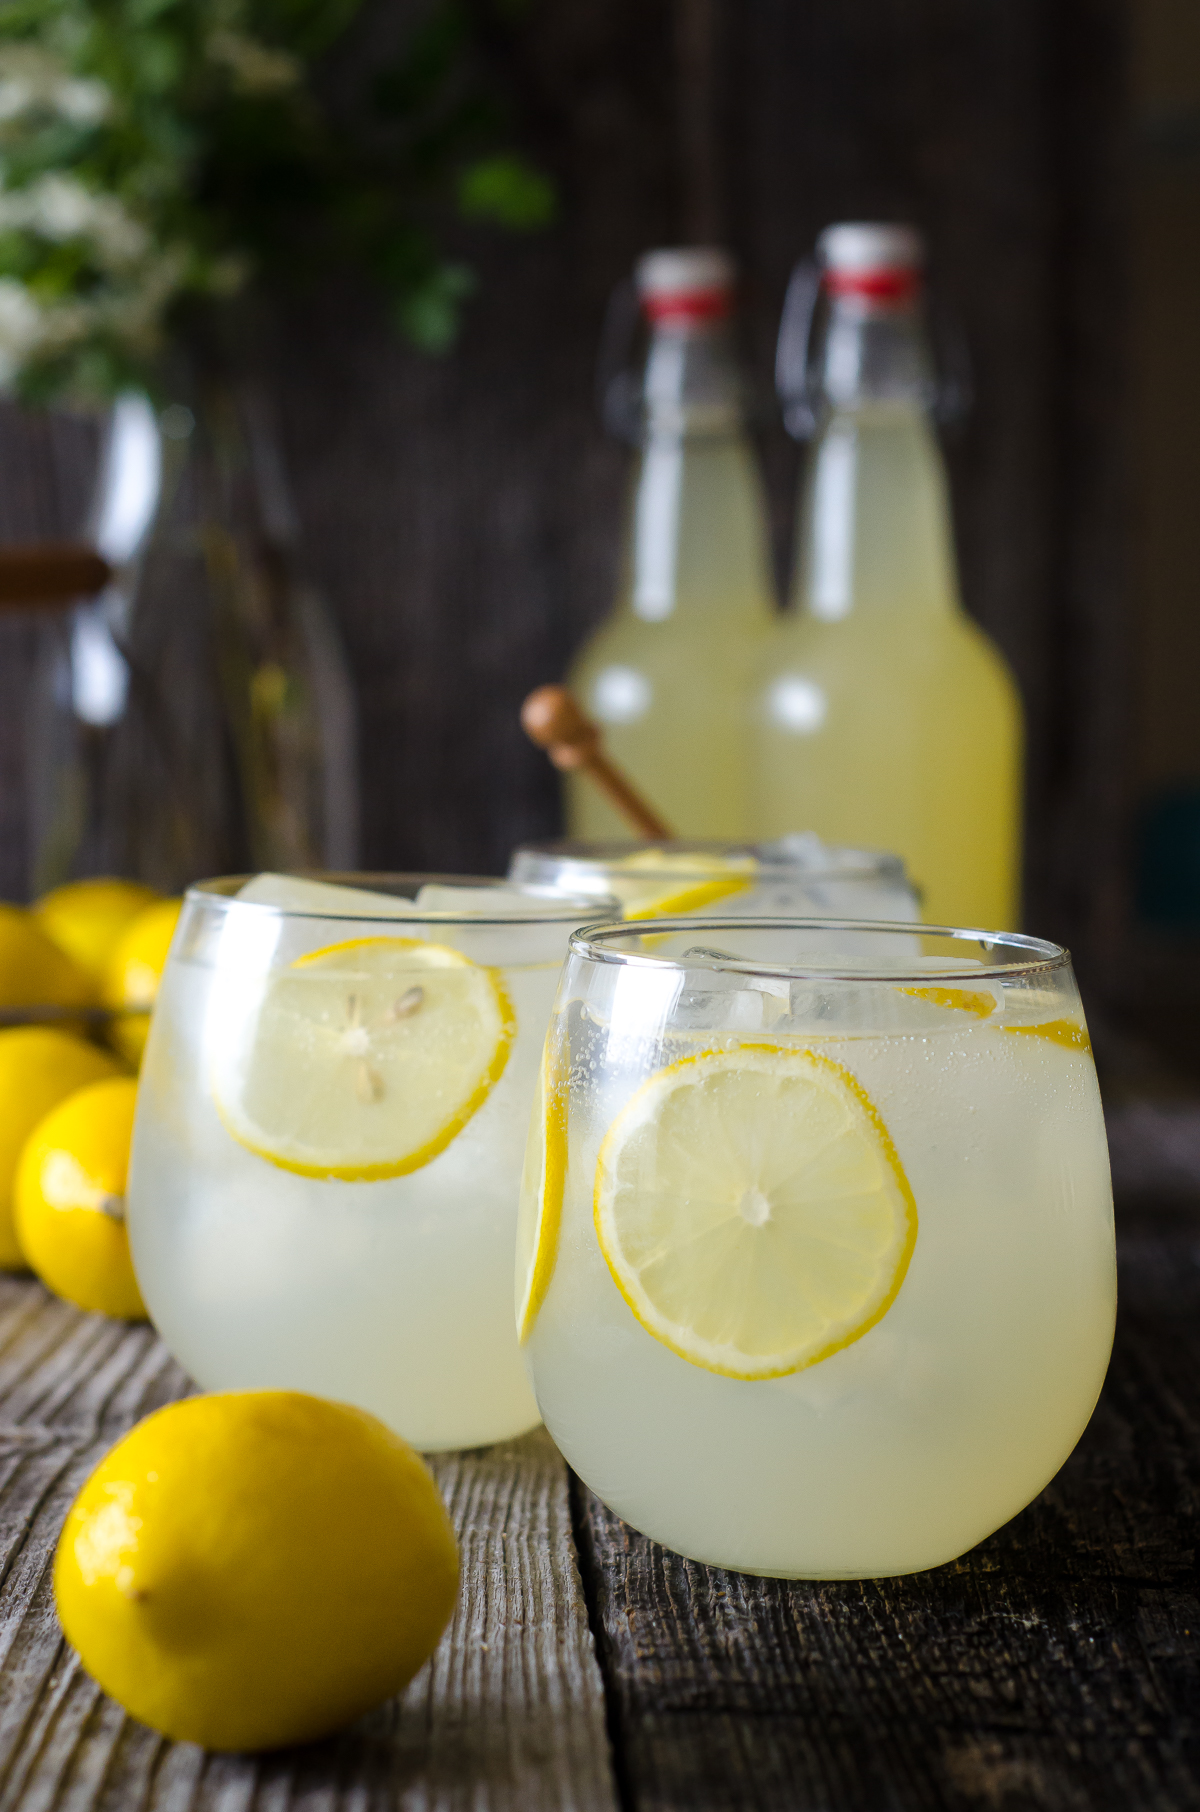 Fermented lemonade in glasses garnished with sliced lemons.